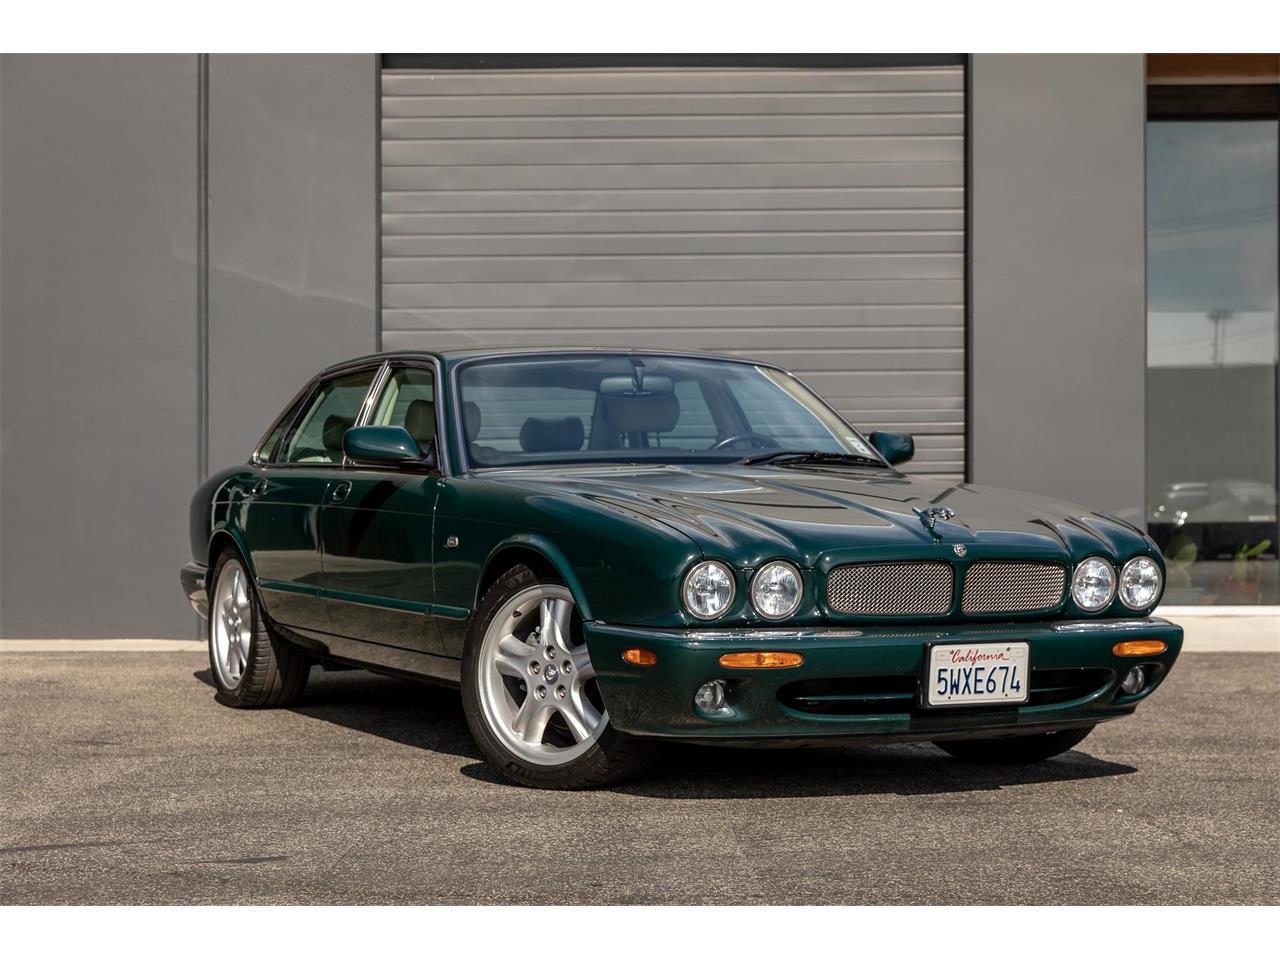 1998 Jaguar XJR for sale in Costa Mesa, CA ...